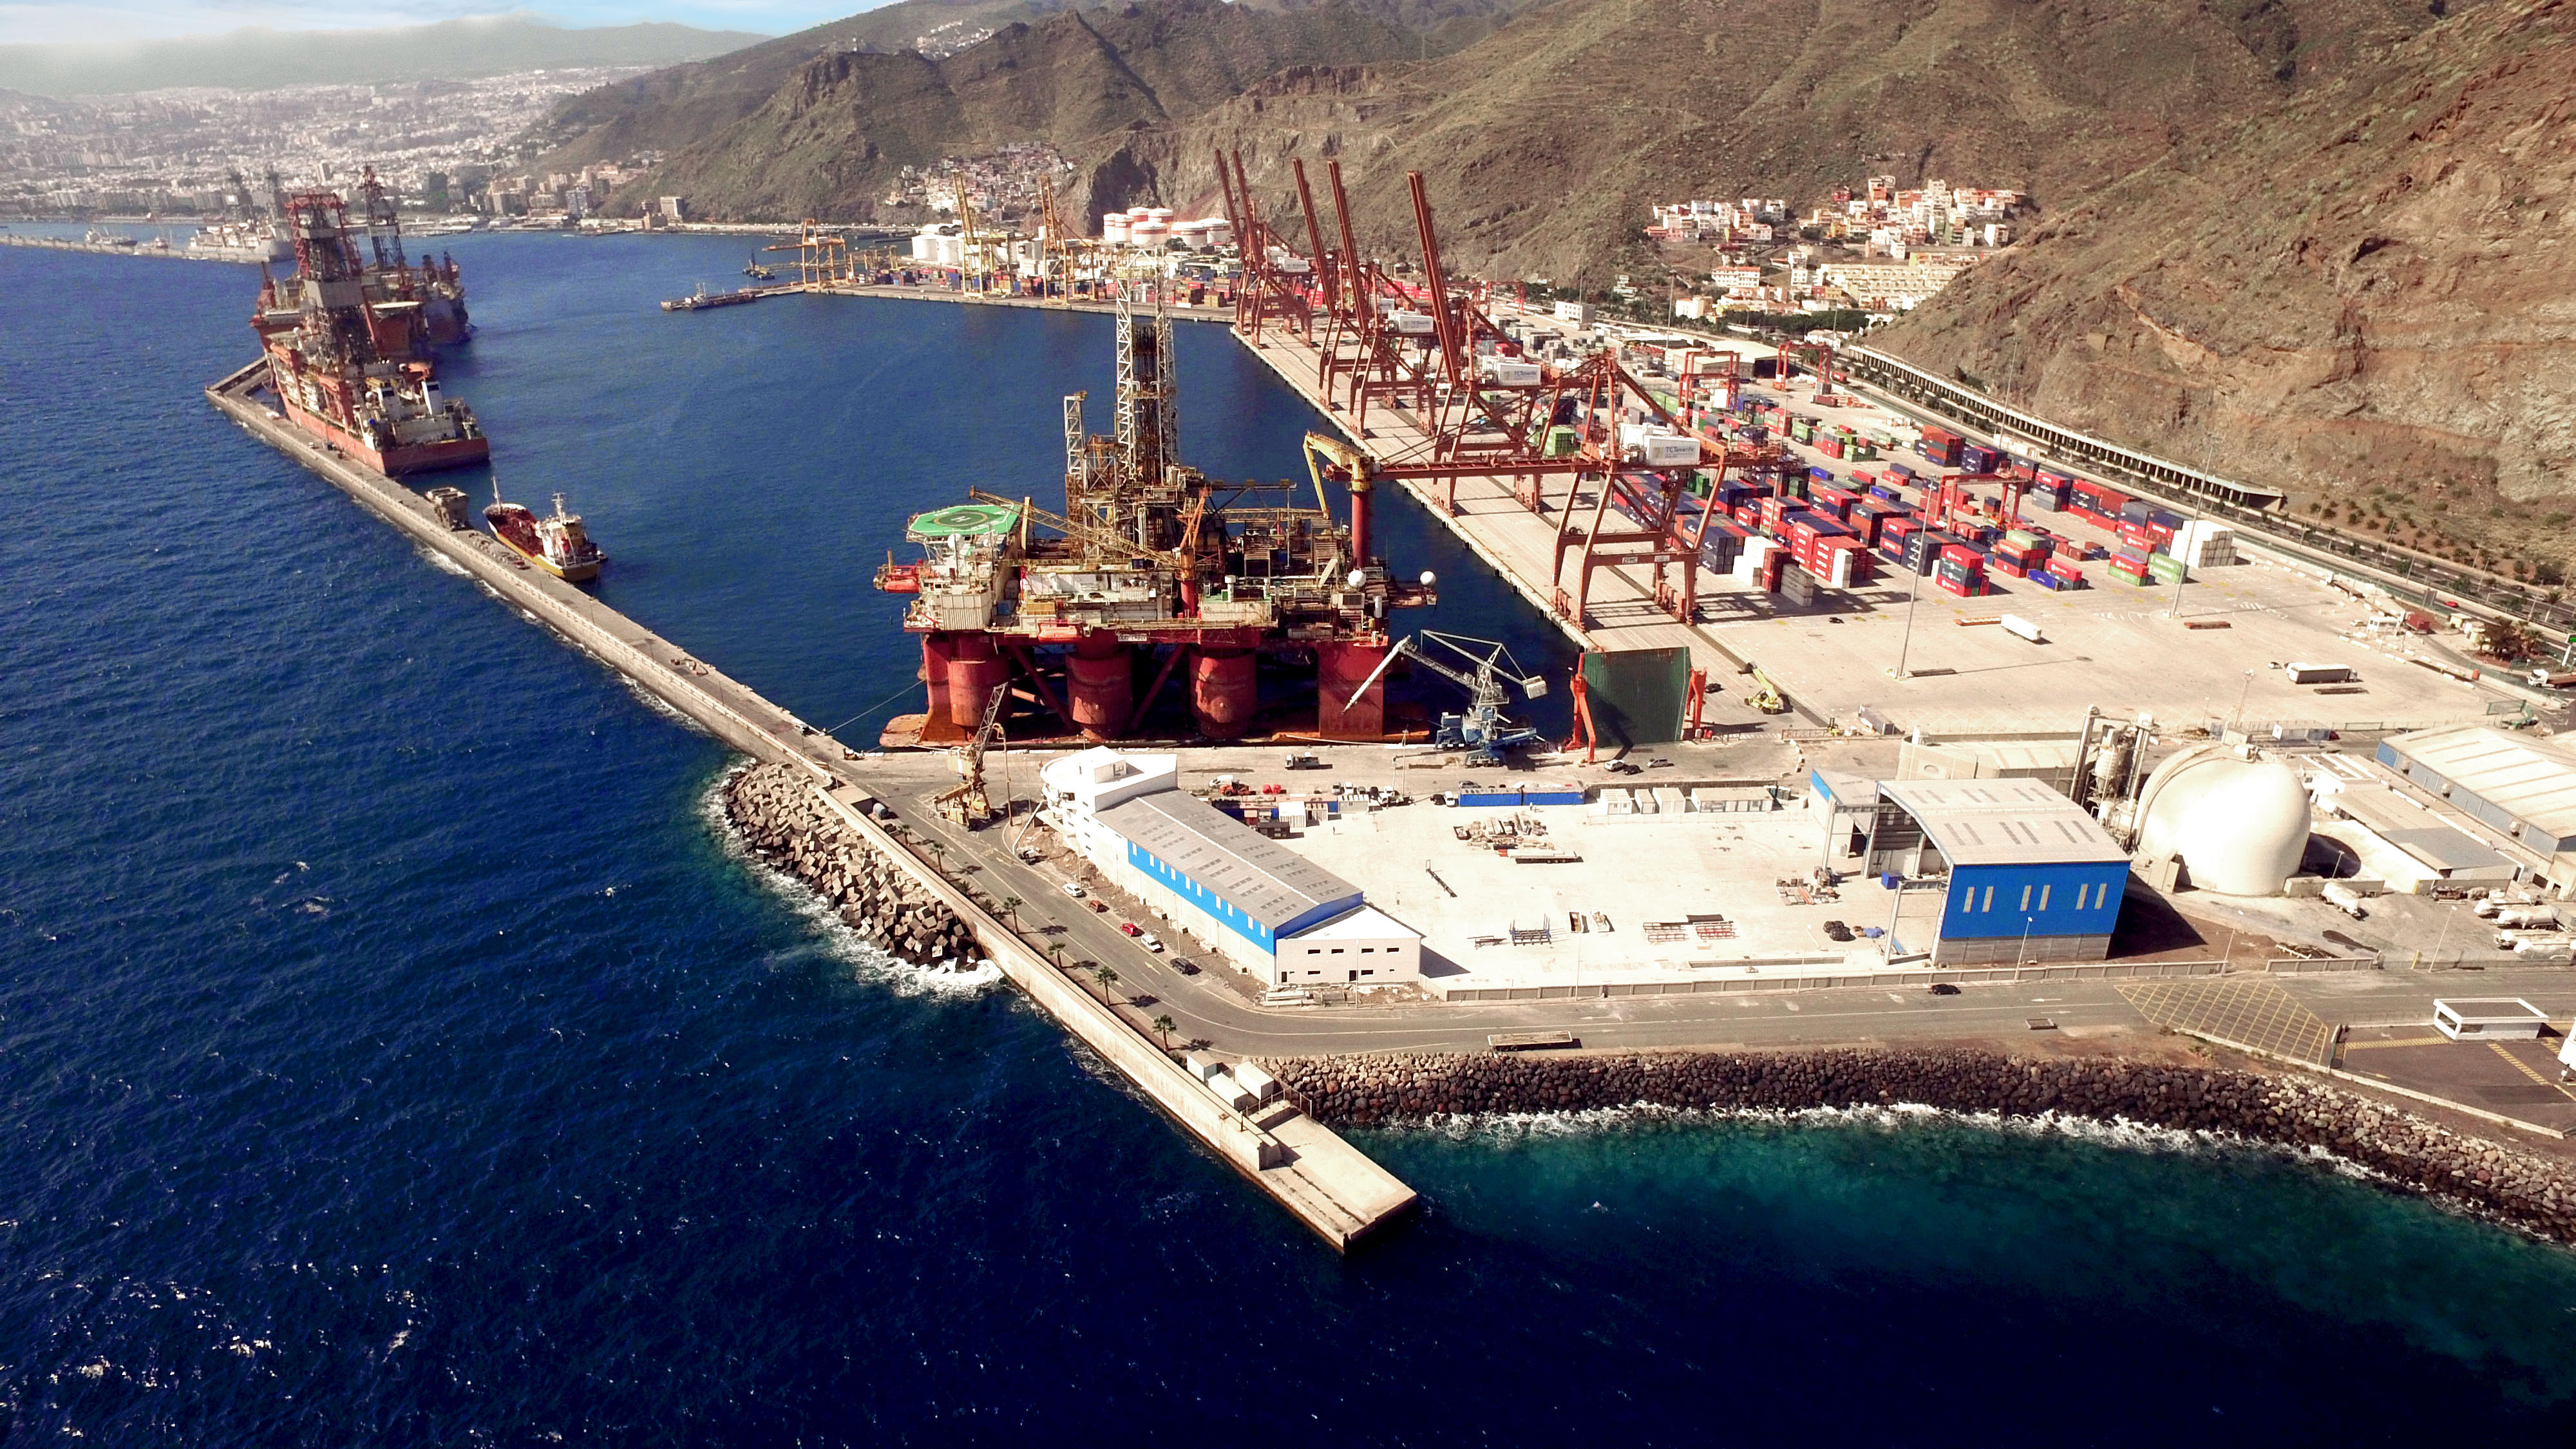 Hidramar Tenerife Shipyard